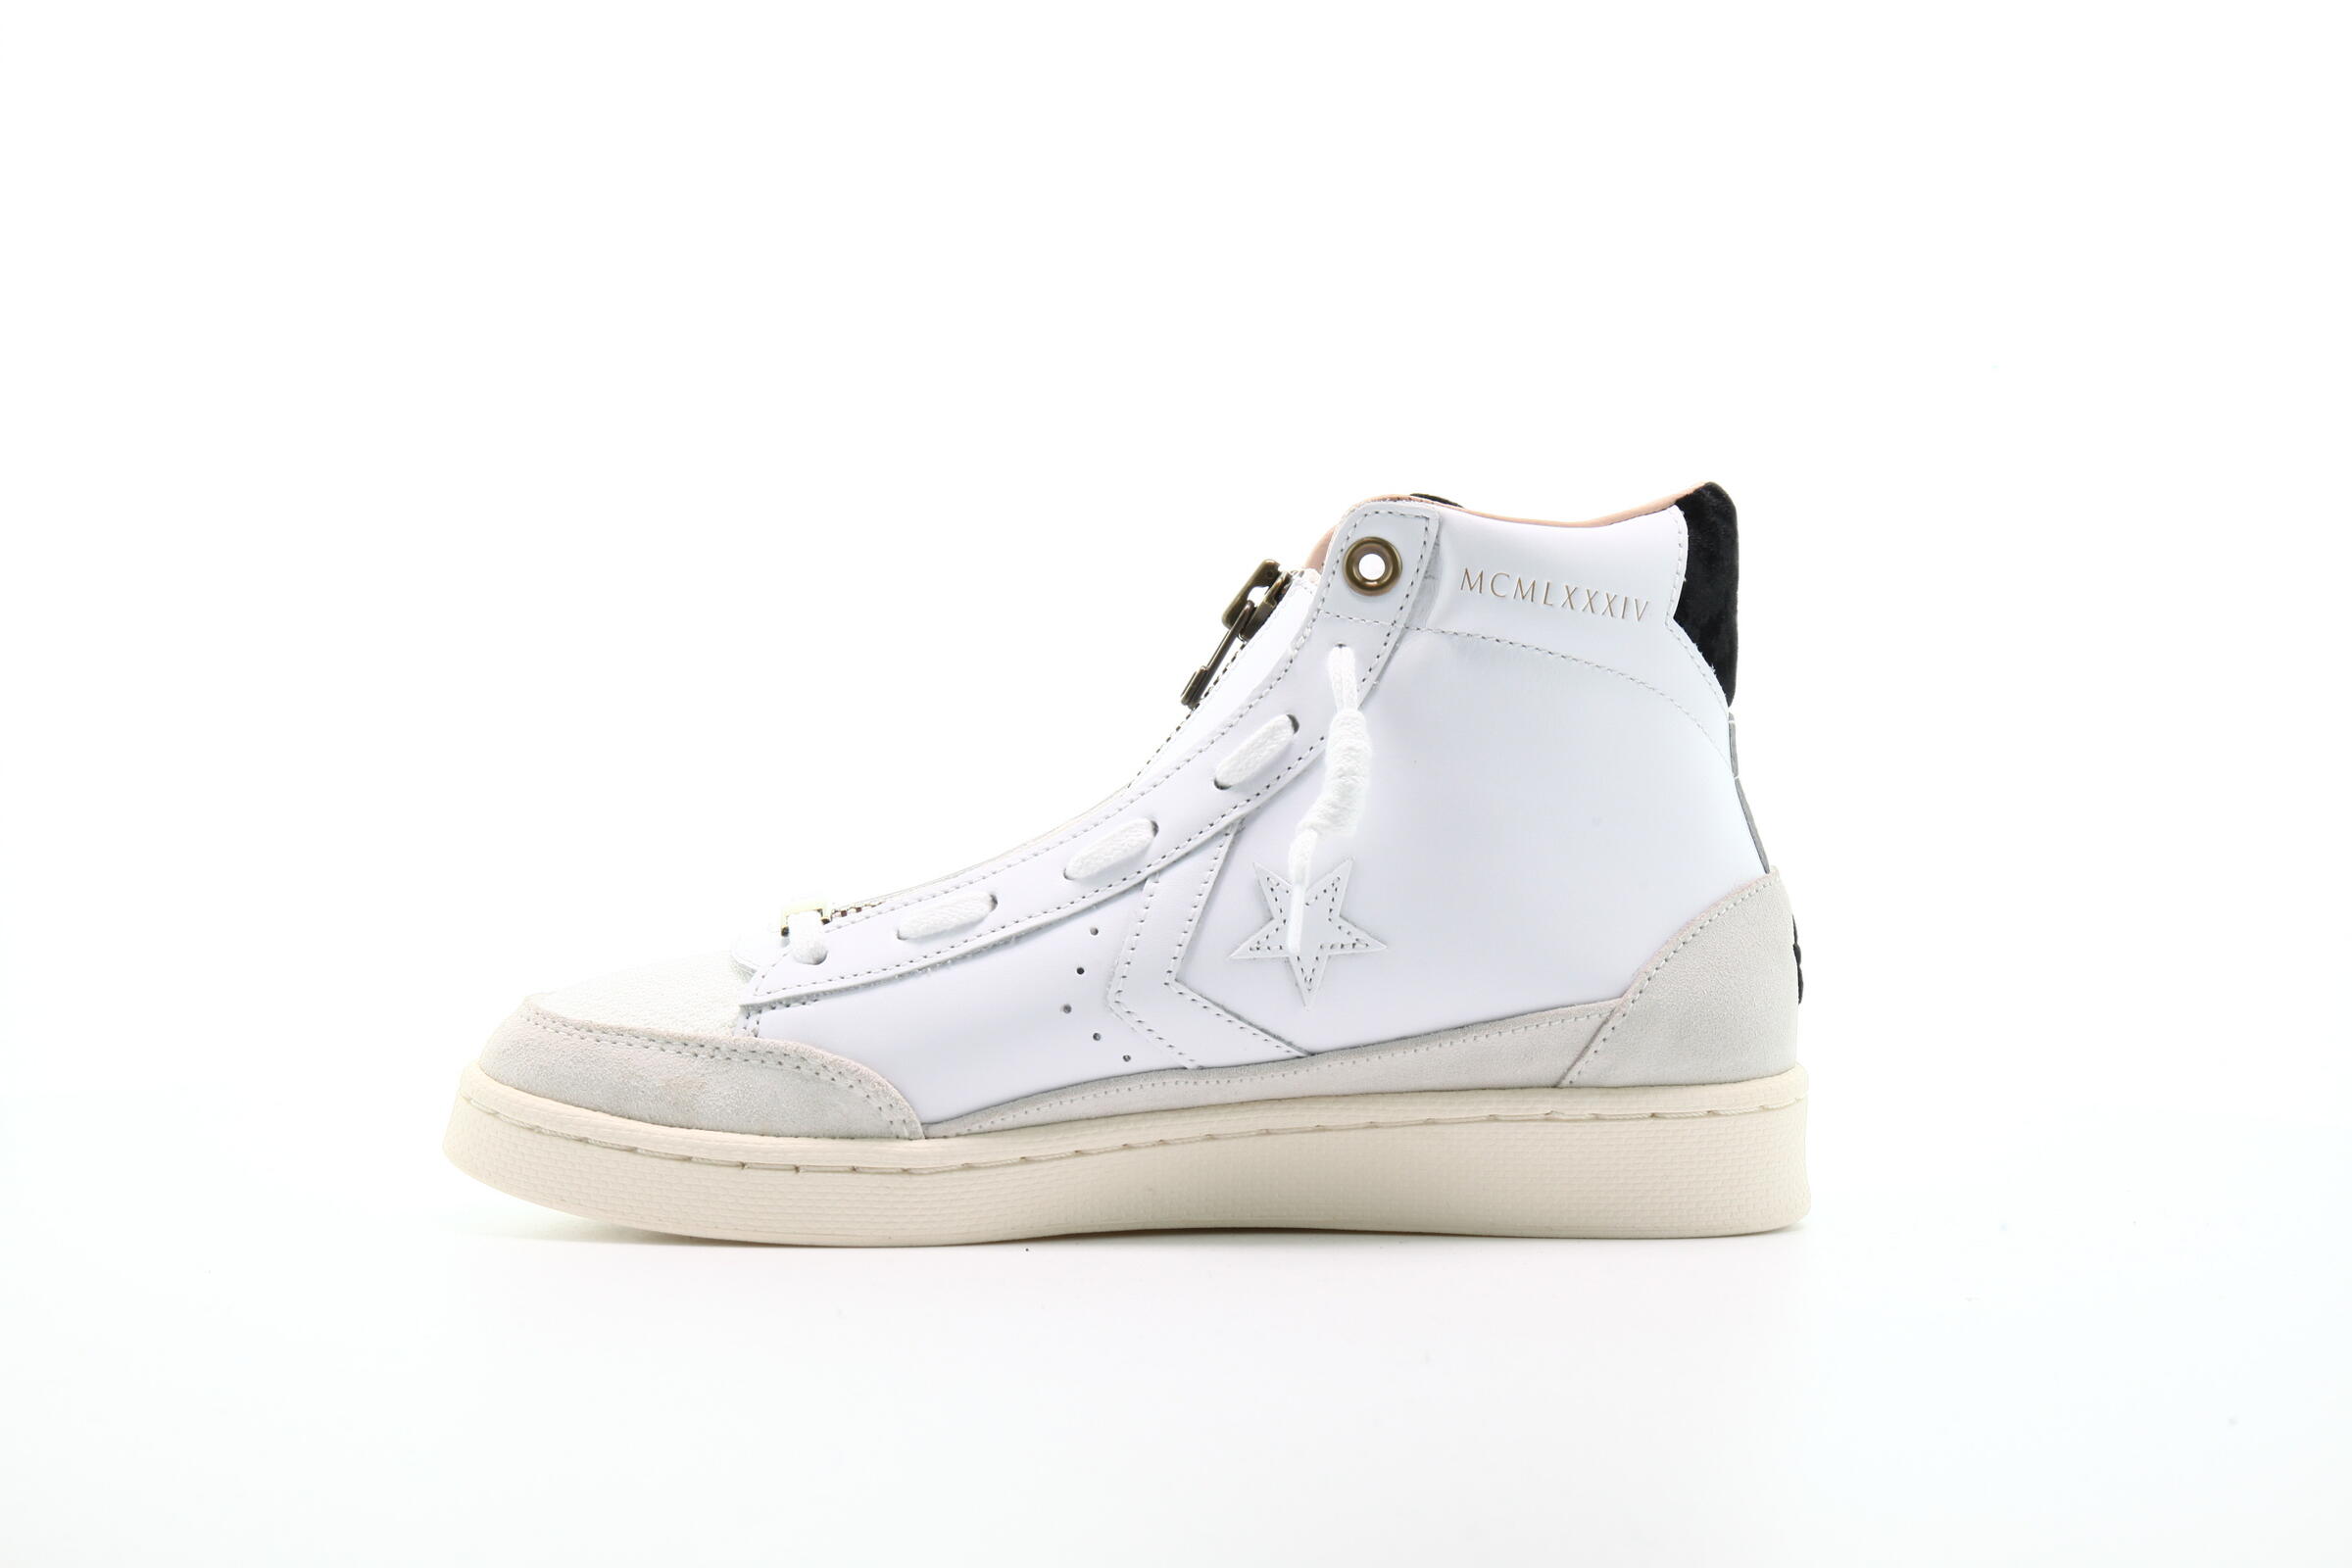 Converse x IBN Jasper Pro Leather Mid "White"